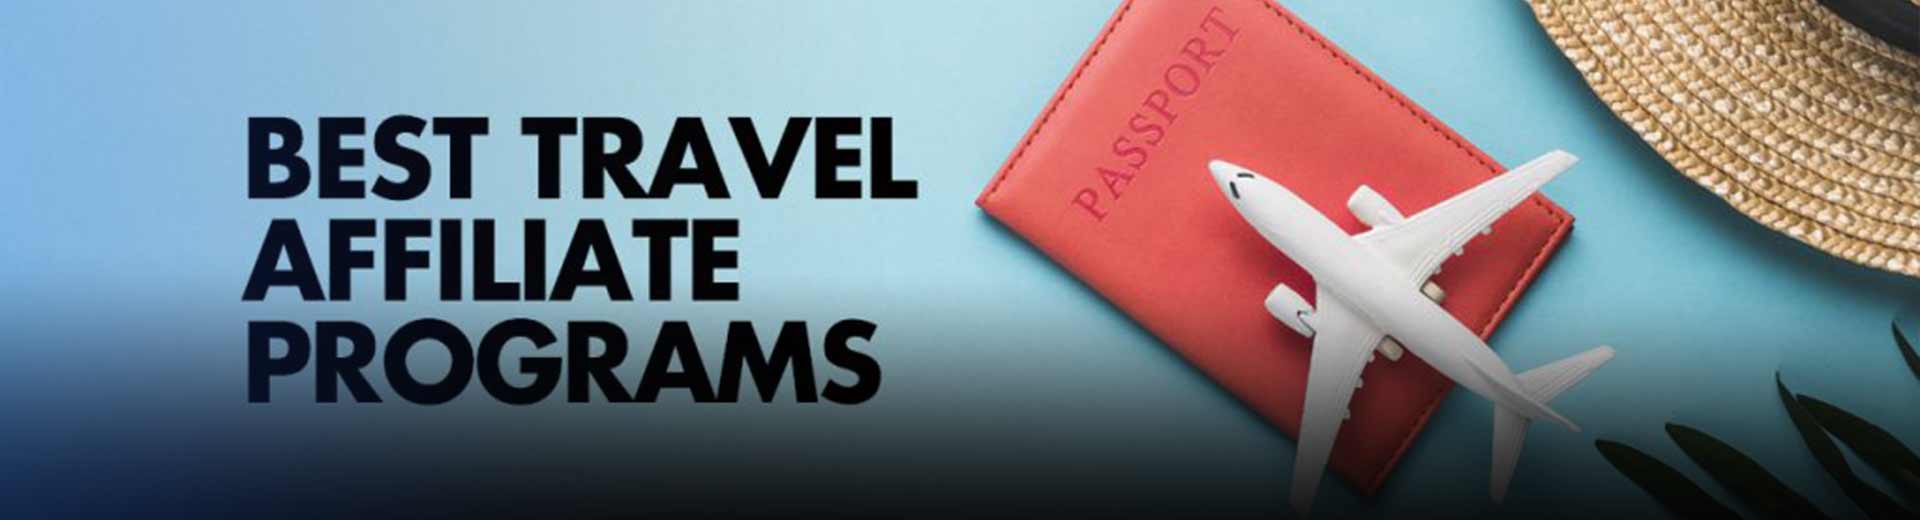 Top 20 Travel Affiliate Programs